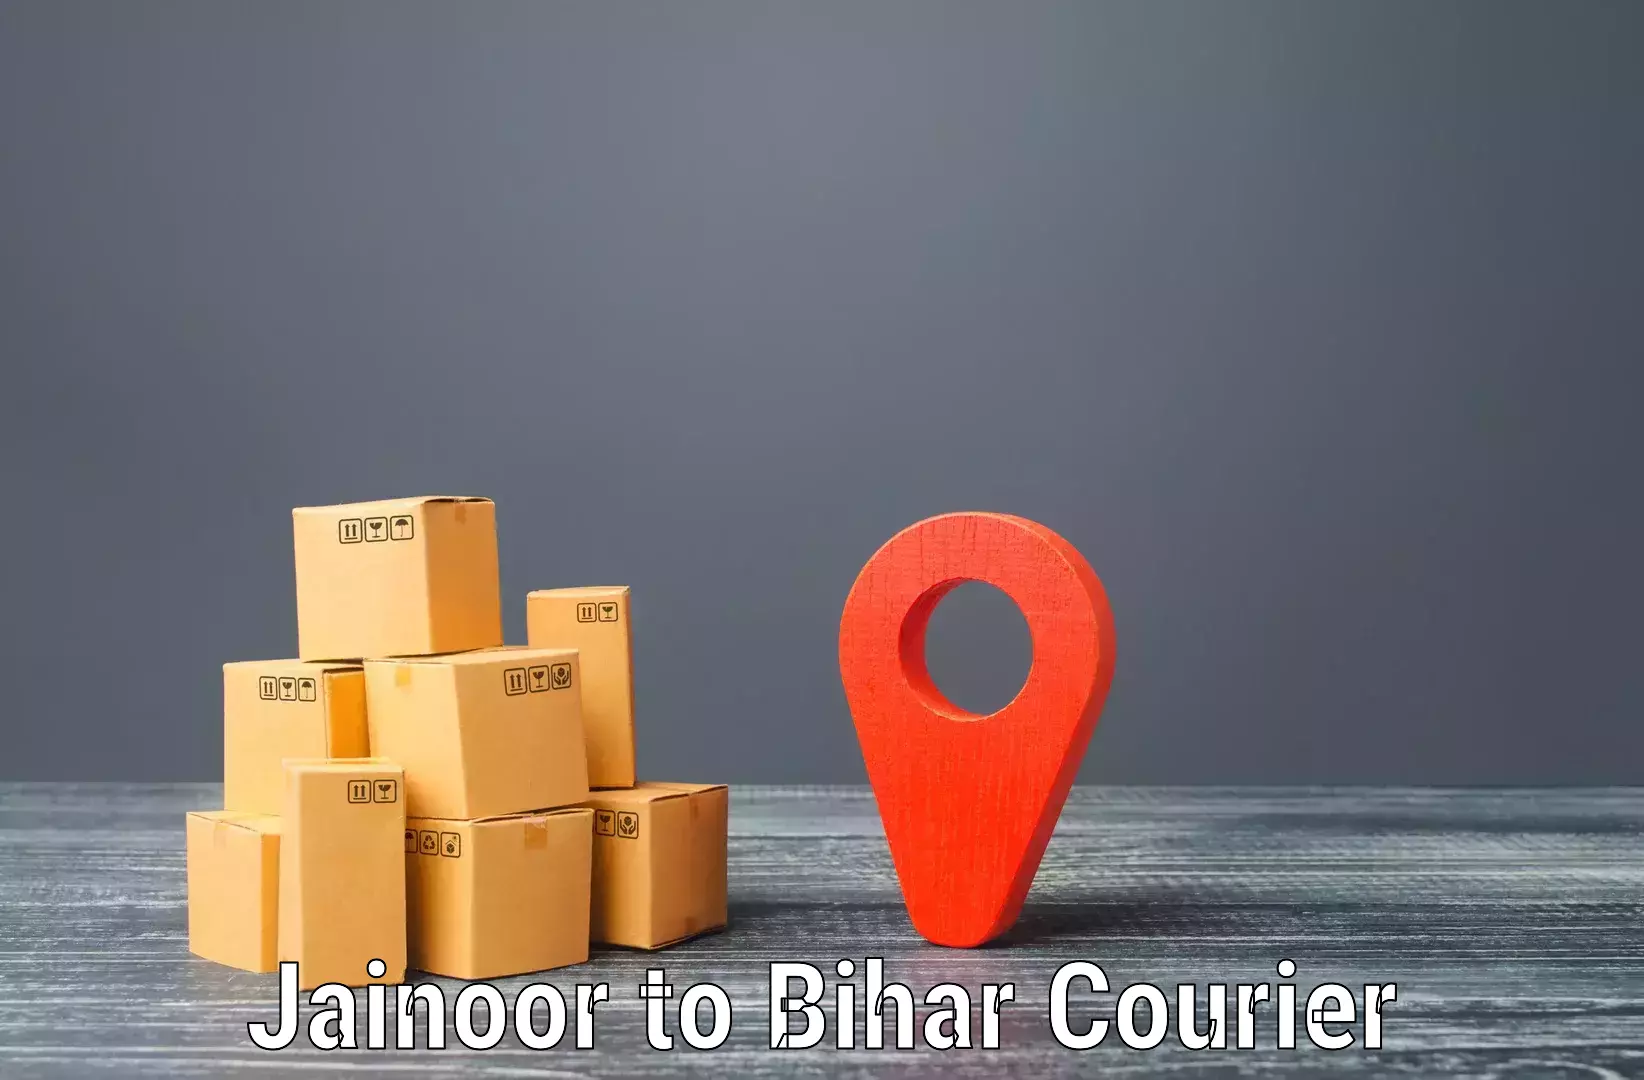 Customizable delivery plans Jainoor to Piro